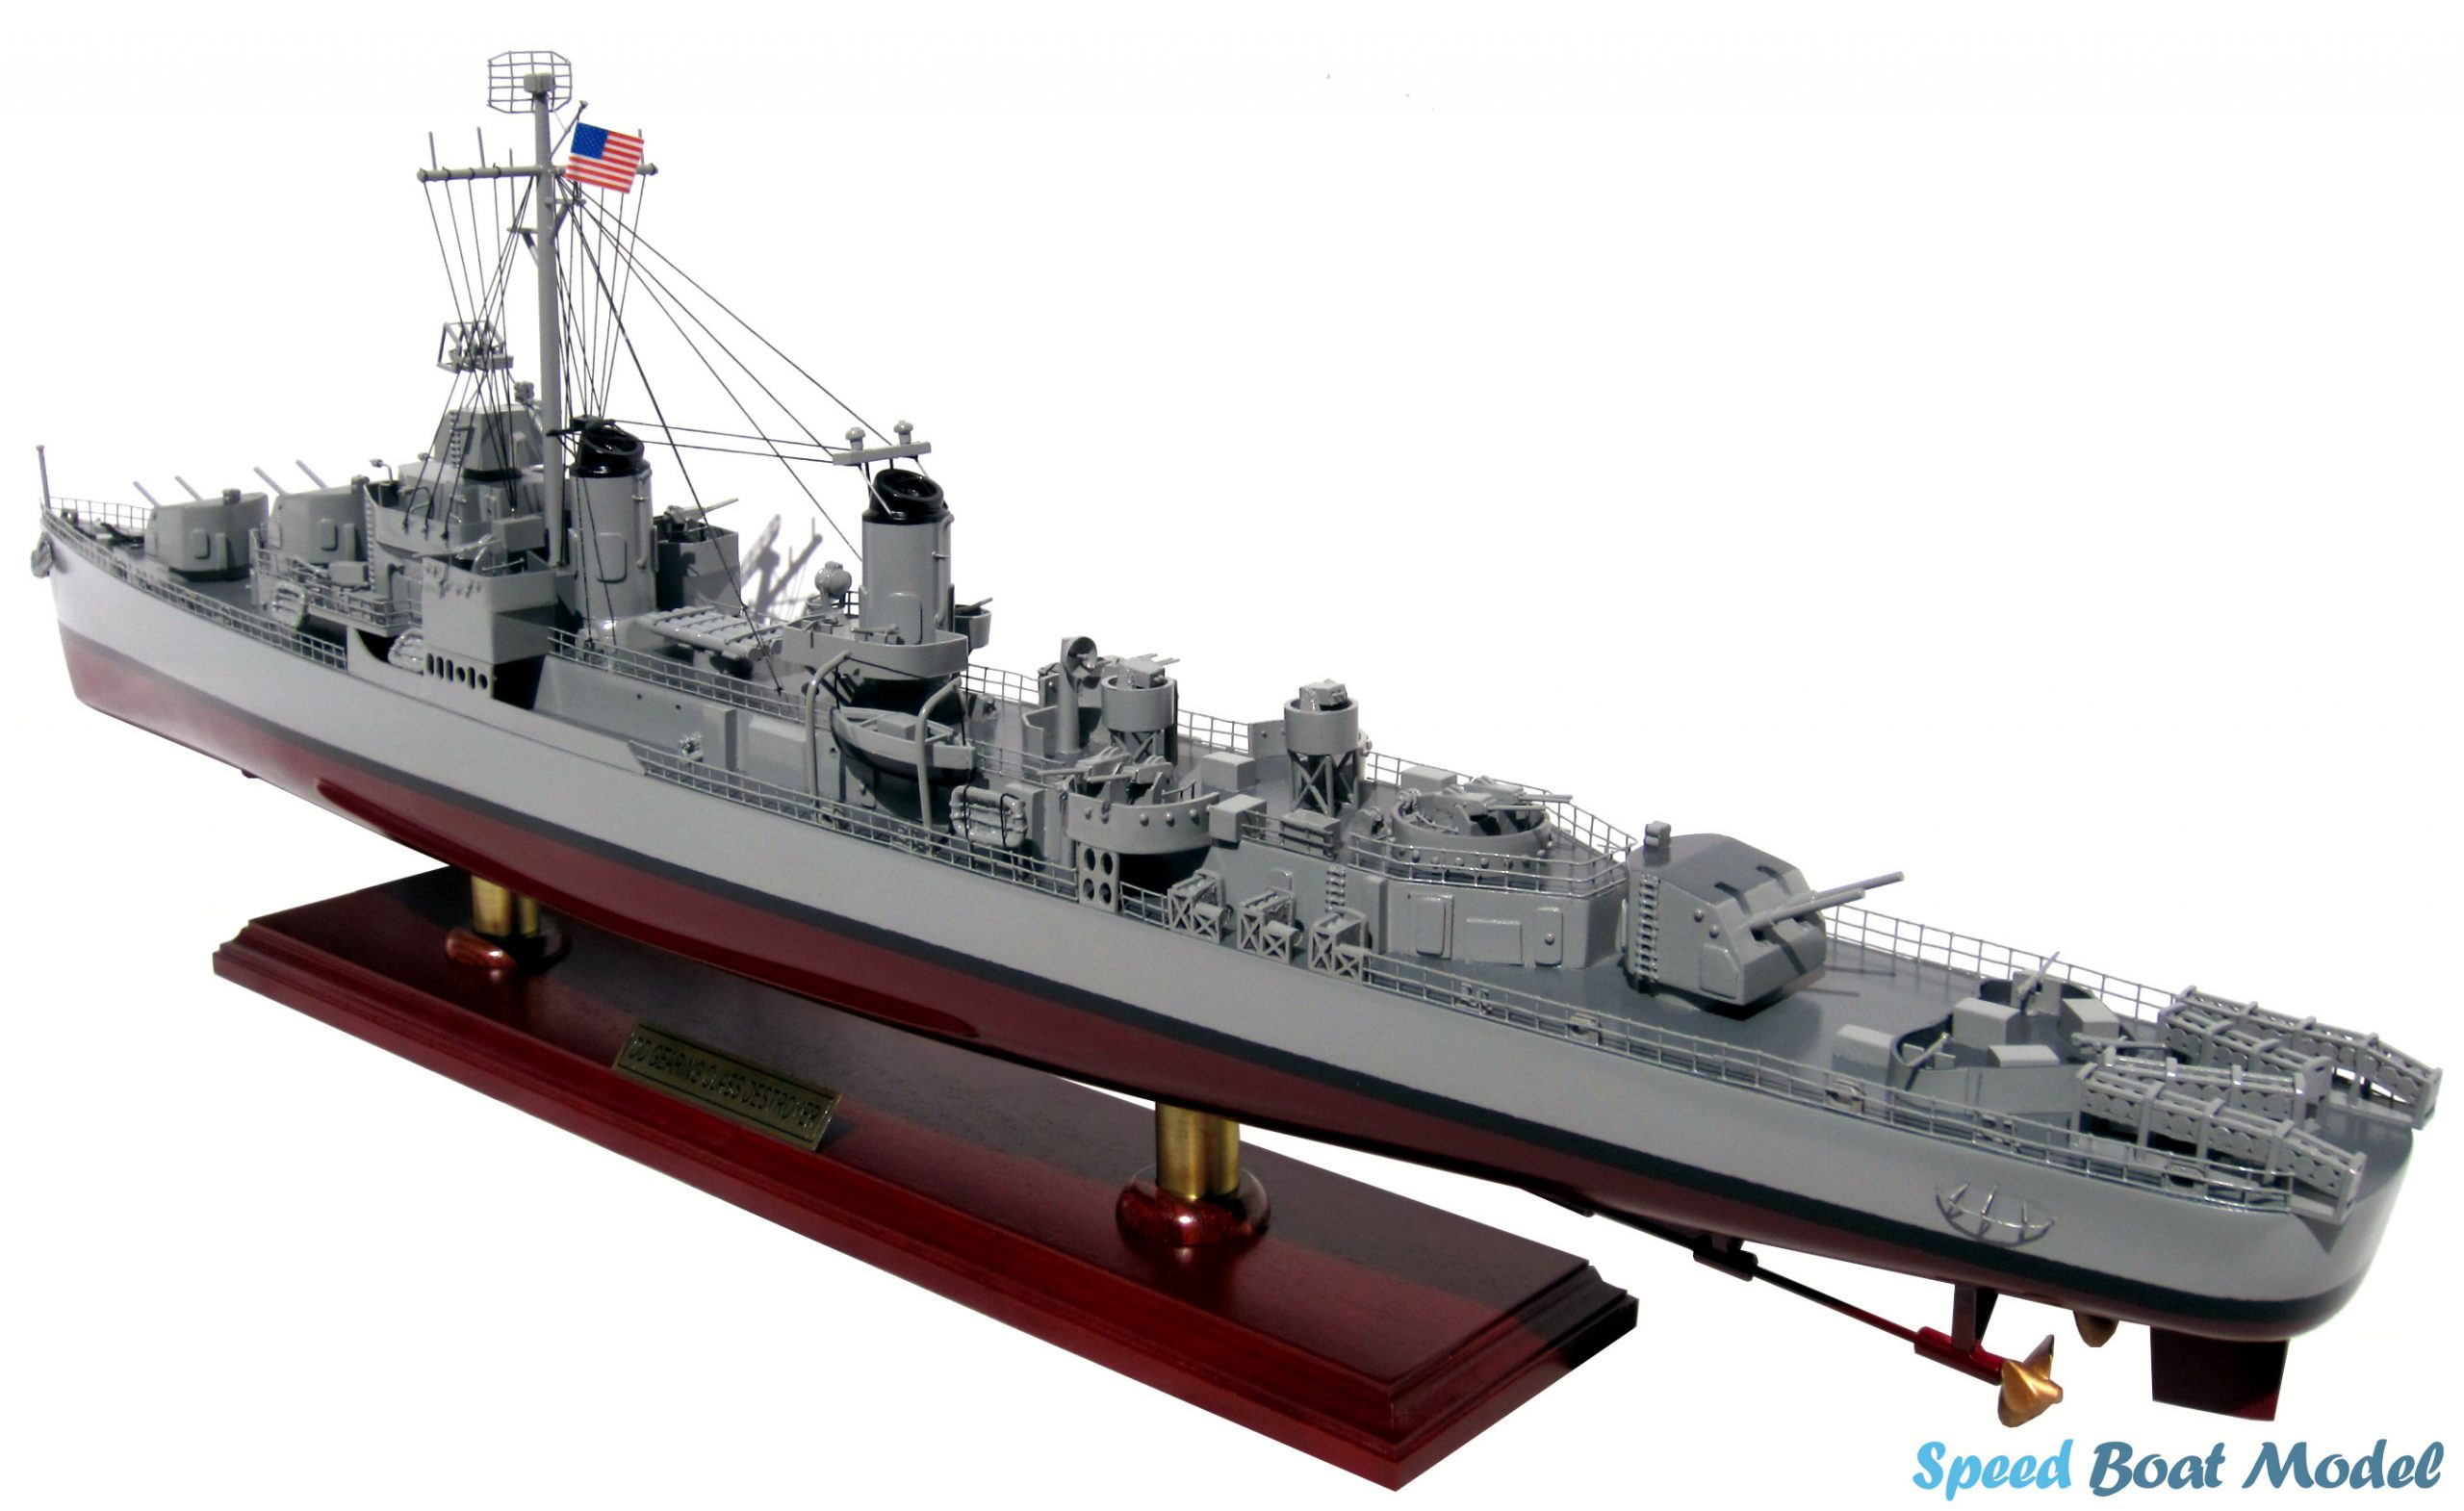 Uss-gearing-class-fletcher-warship-model-39-4-scaled